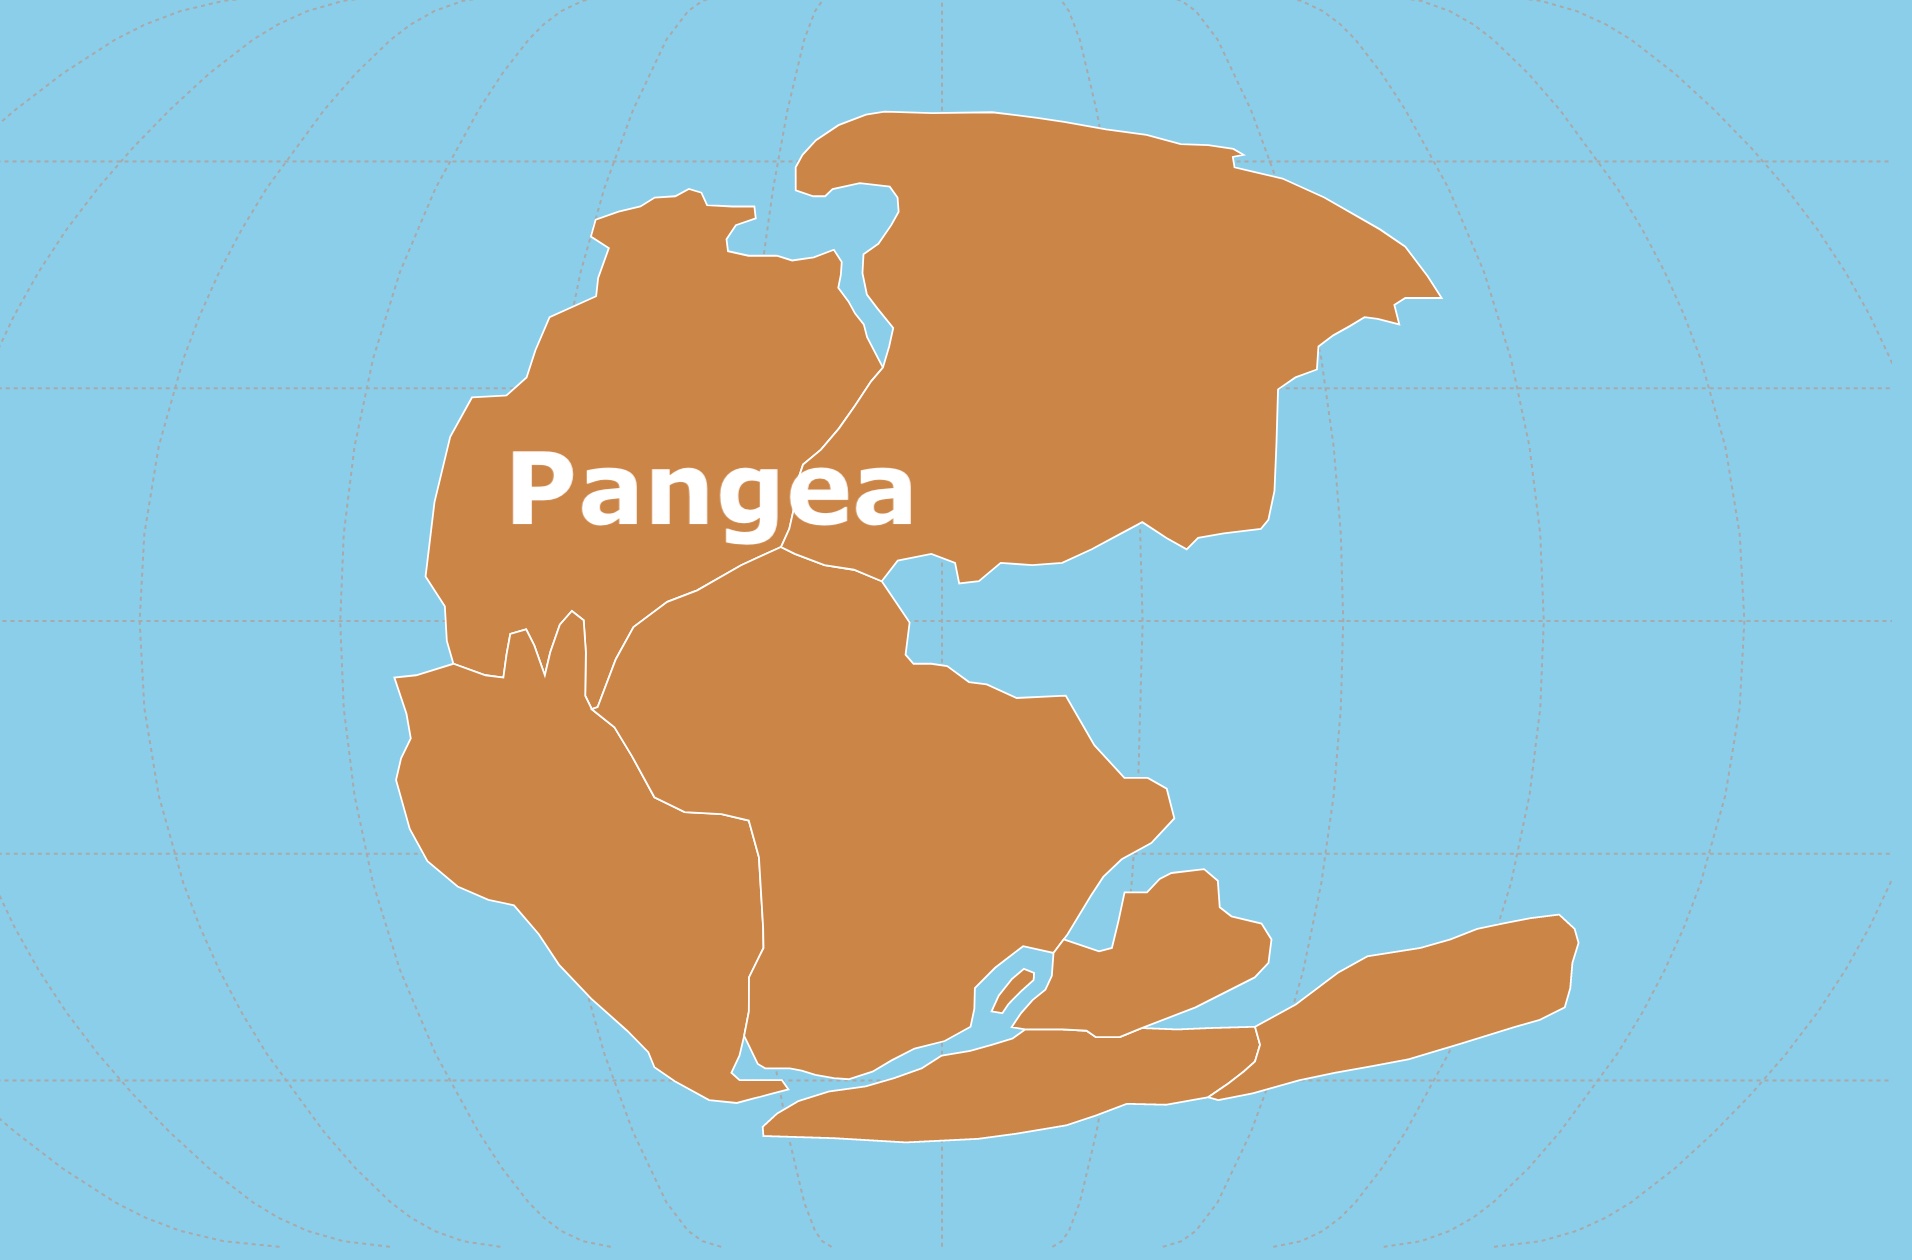 746 Pangea Images, Stock Photos, 3D objects, & Vectors | Shutterstock